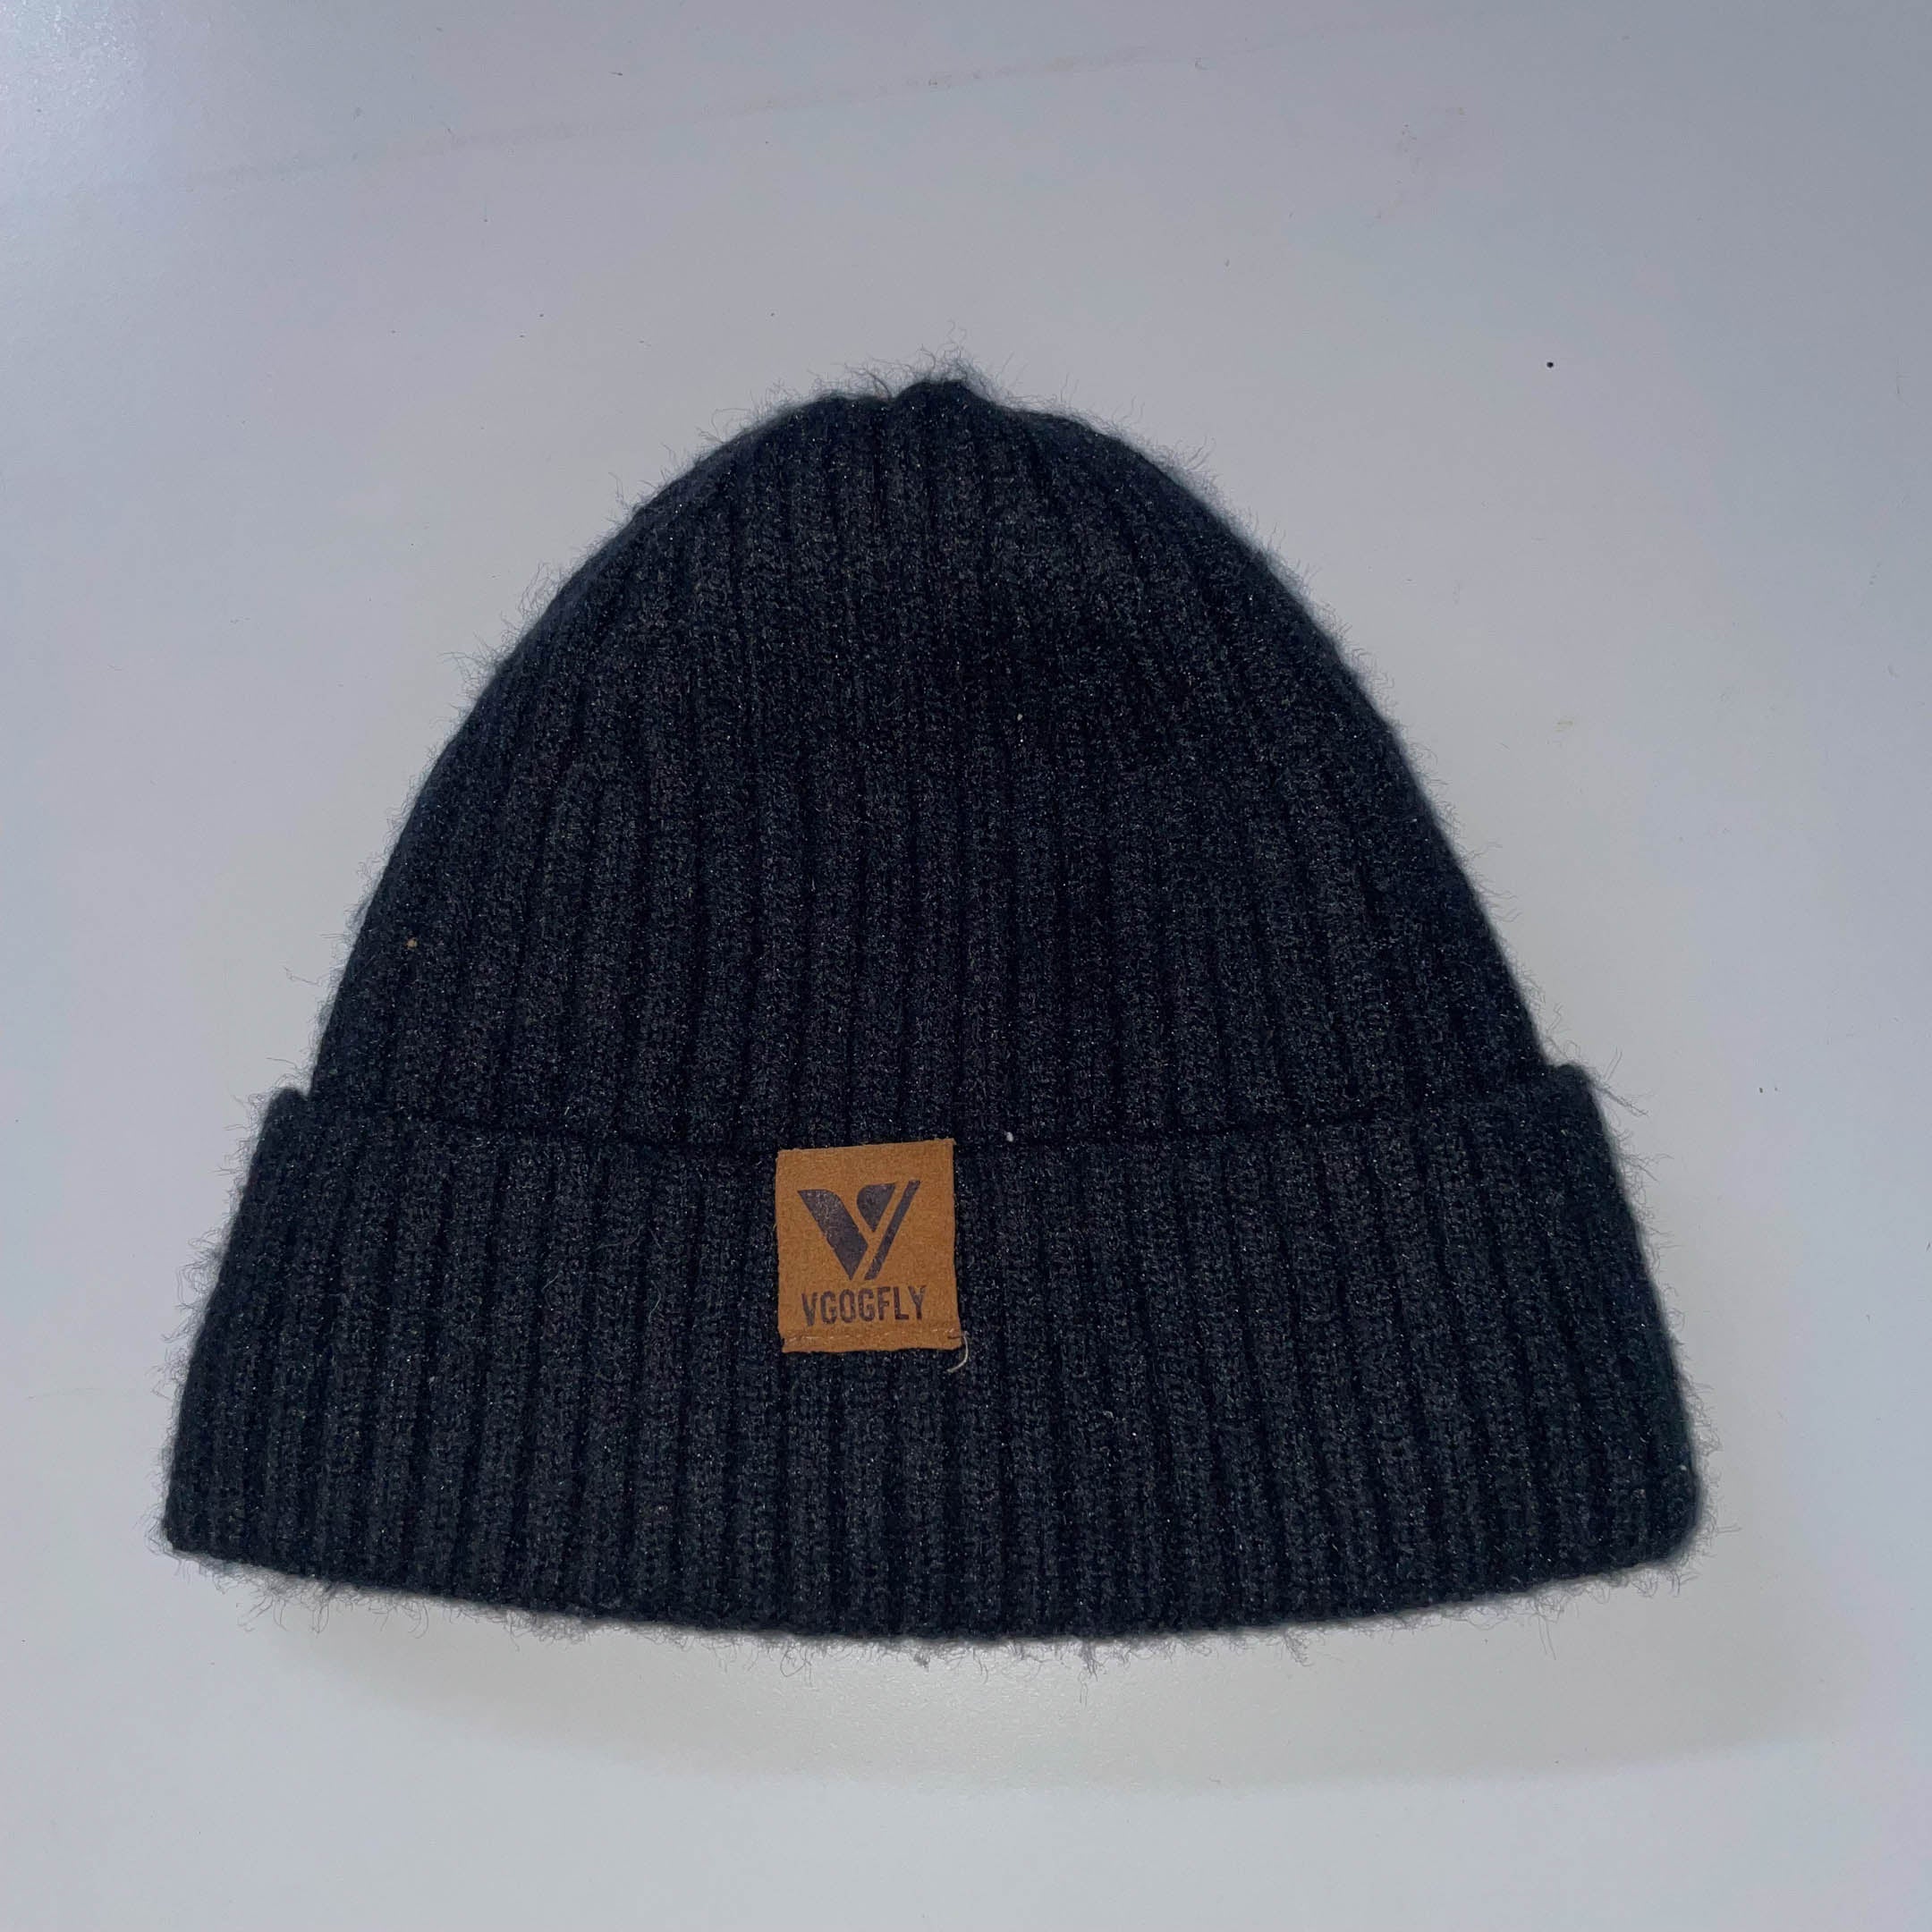 Vintage Vcogfly black winter beanie hat| Black | SKU 3689